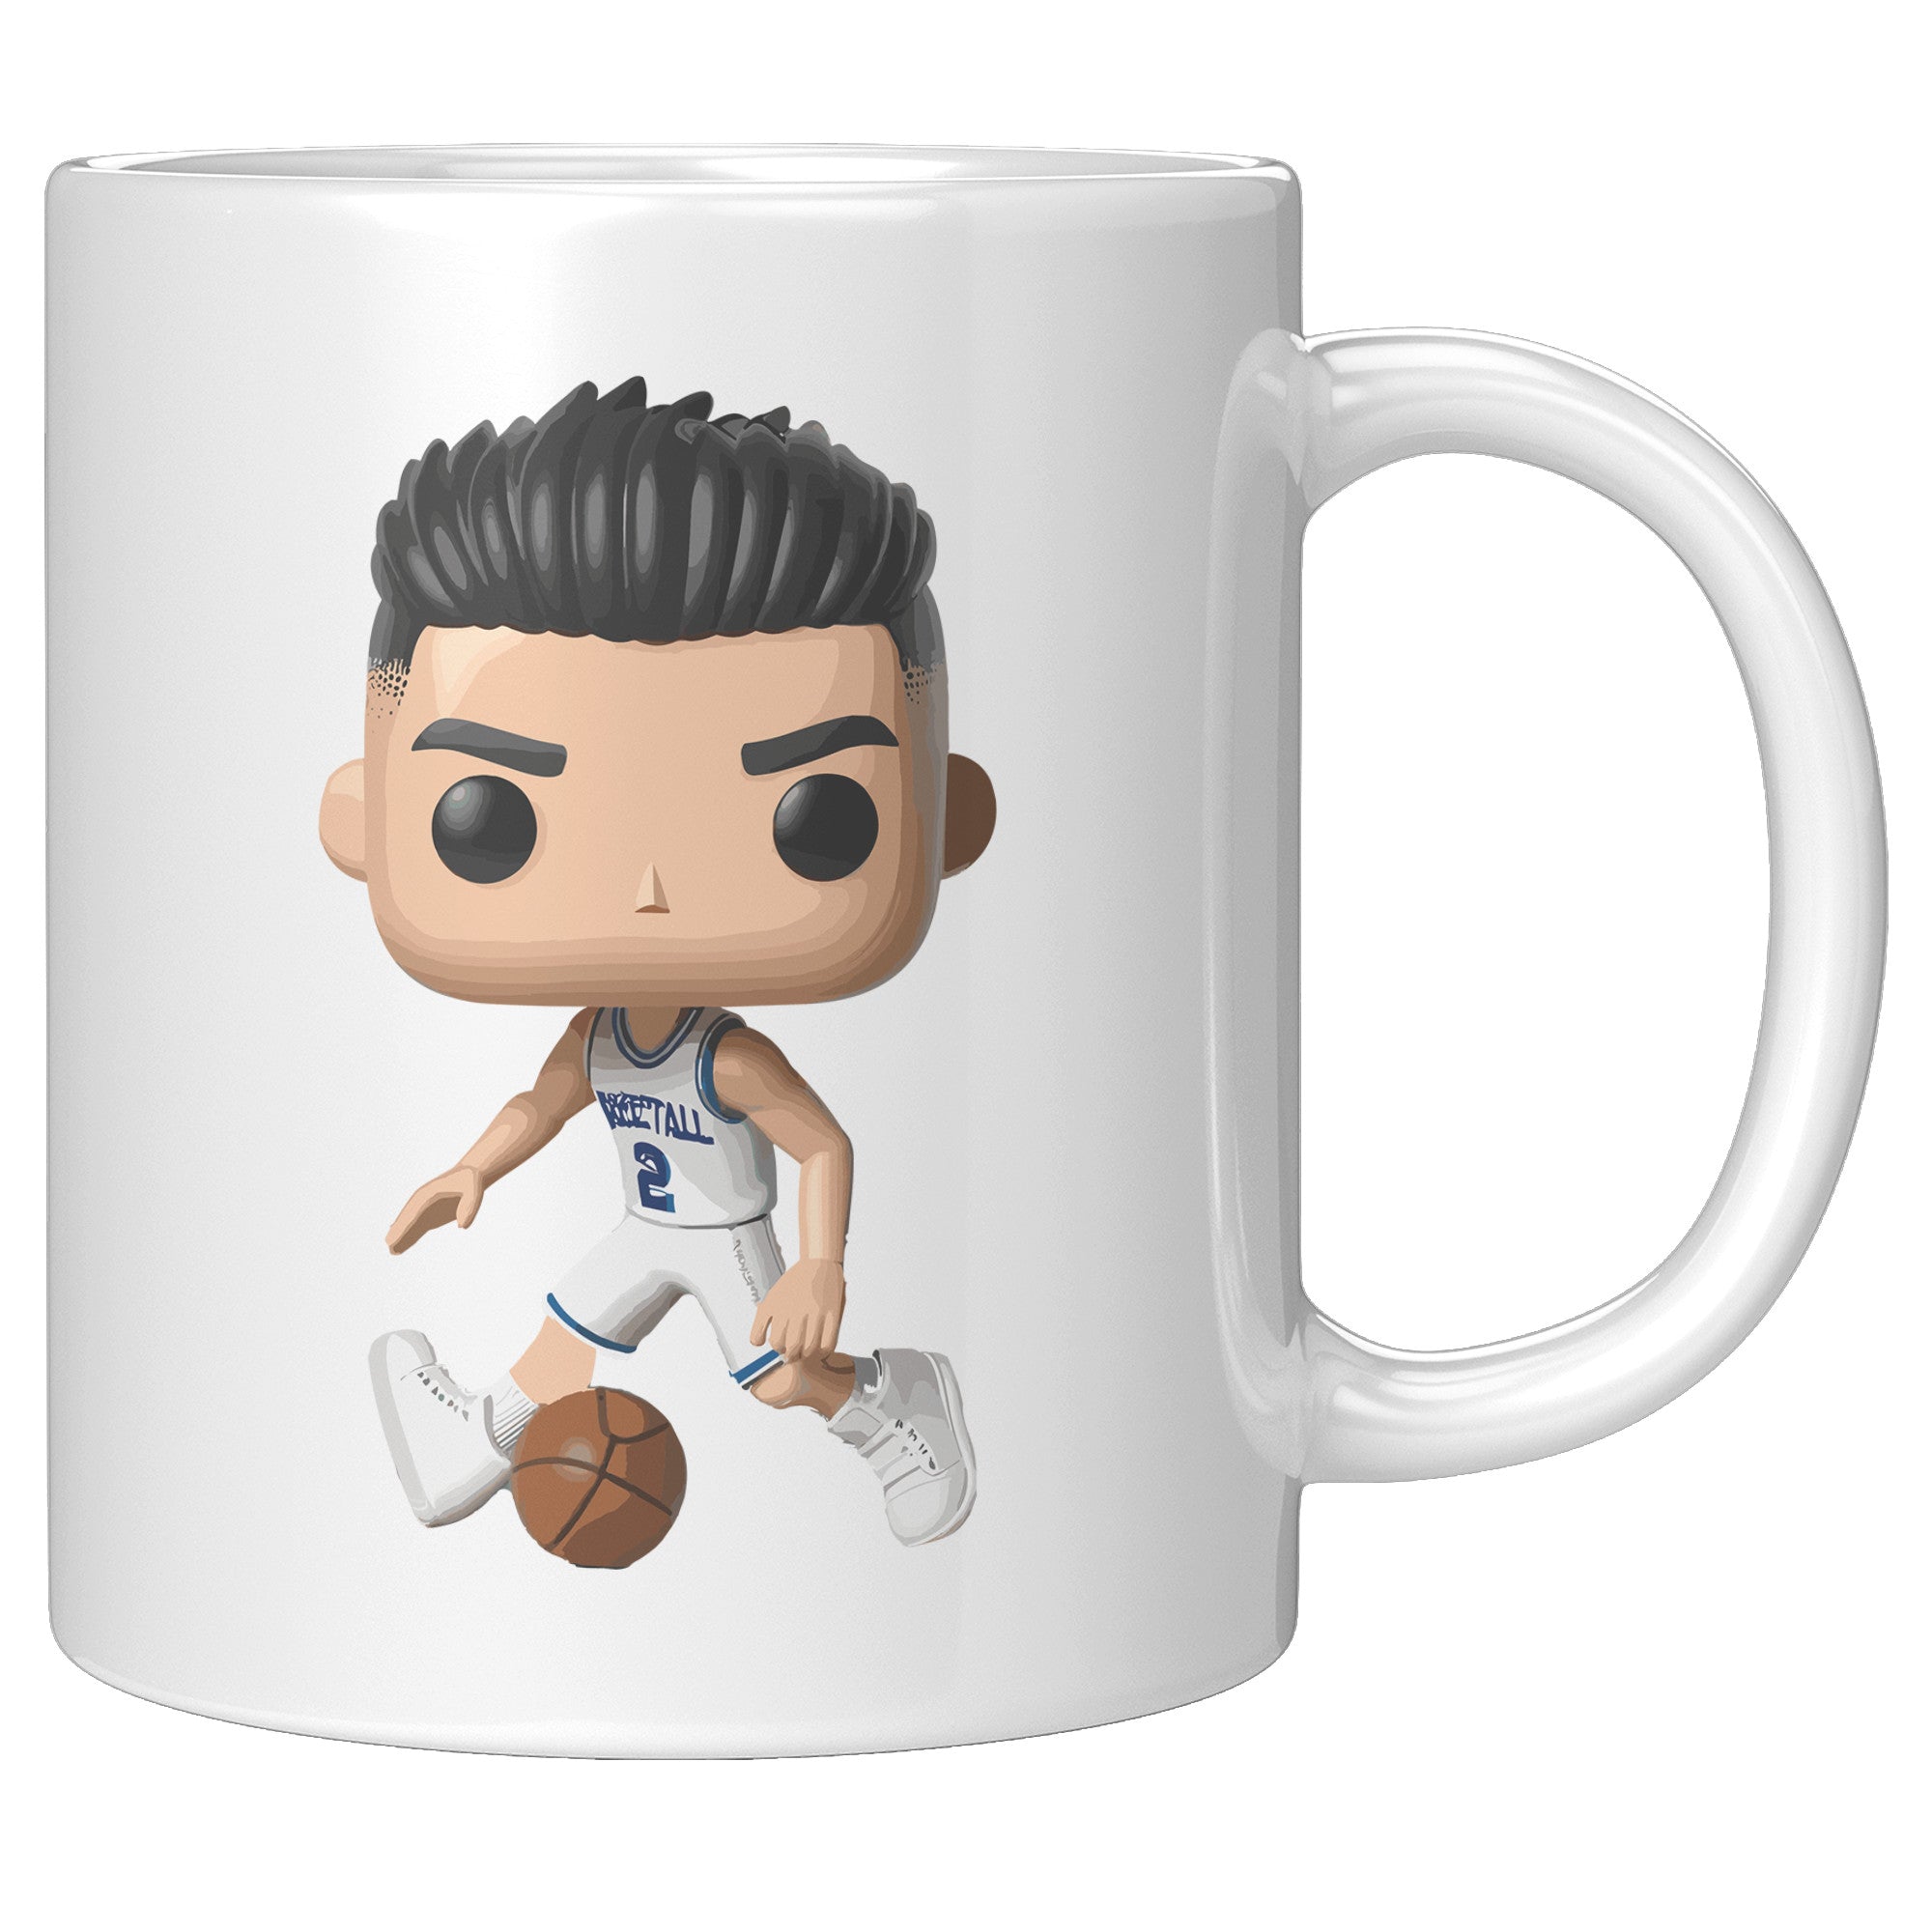 "Slam Dunk Basketball Coffee Mug - Hoops Enthusiast Cup- Perfect Gift for Basketball Players & Fans - Court-Ready Style Coffee Mug" - I